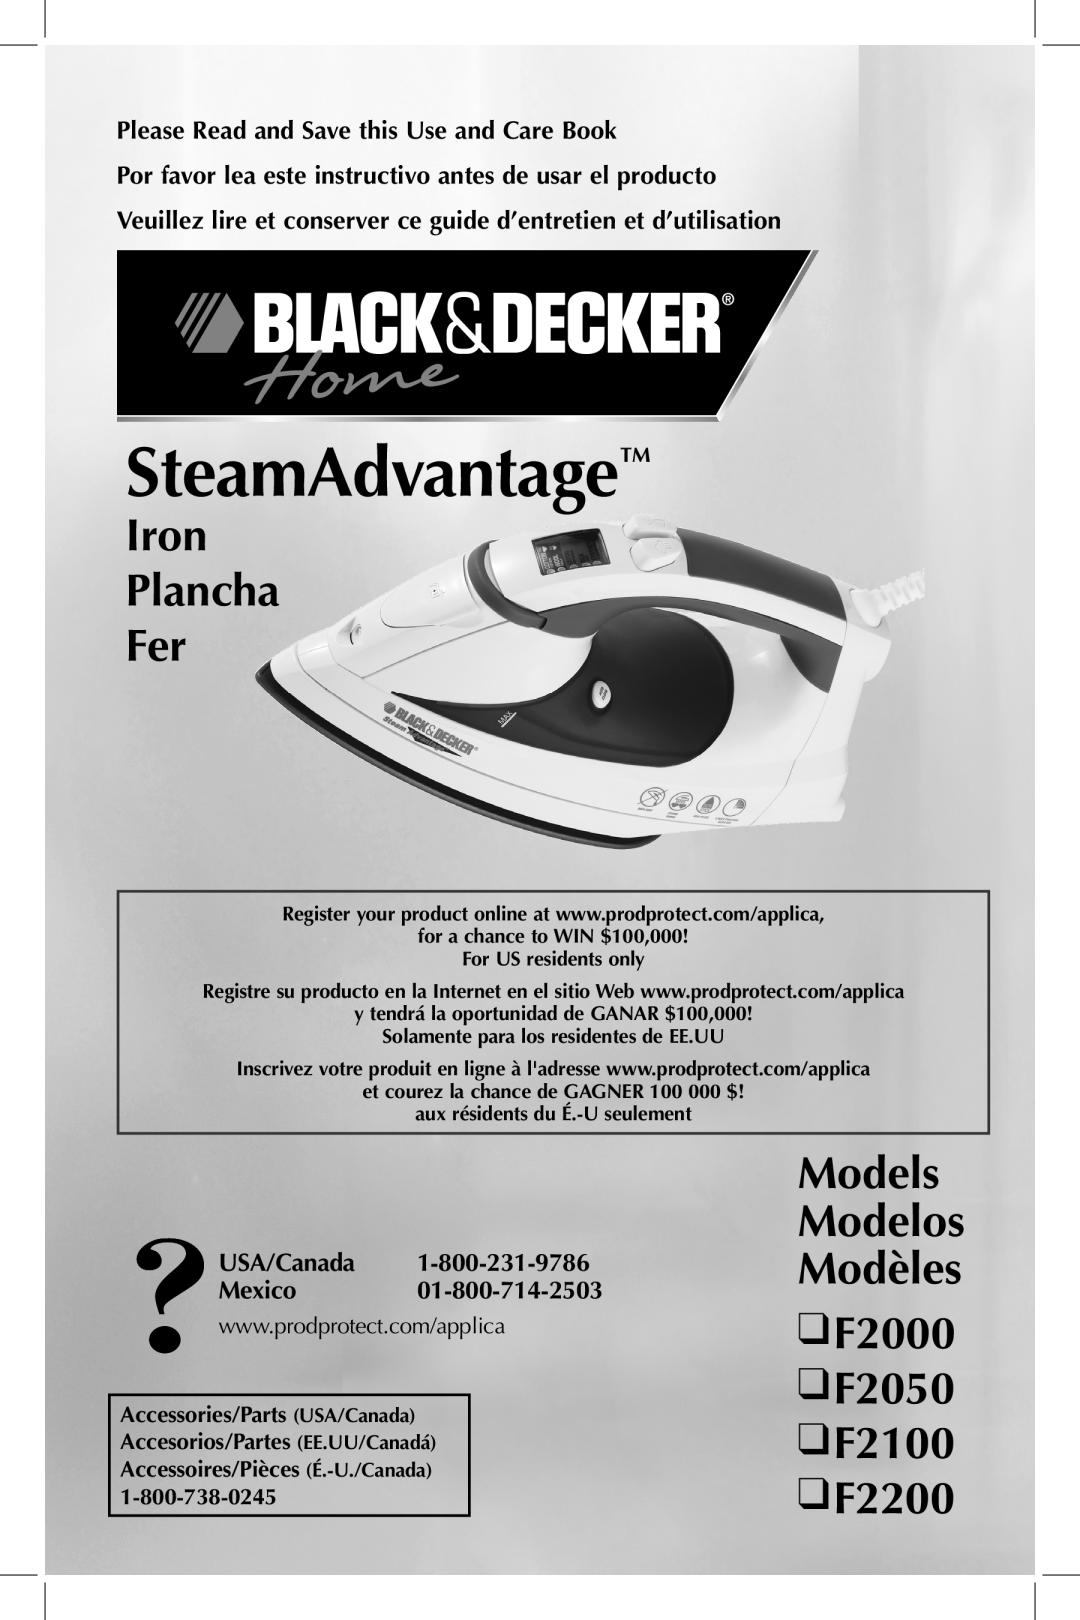 Black & Decker manual Iron Plancha Fer, Models Modelos Modèles F2000 F2050 F2100 F2200, SteamAdvantage 